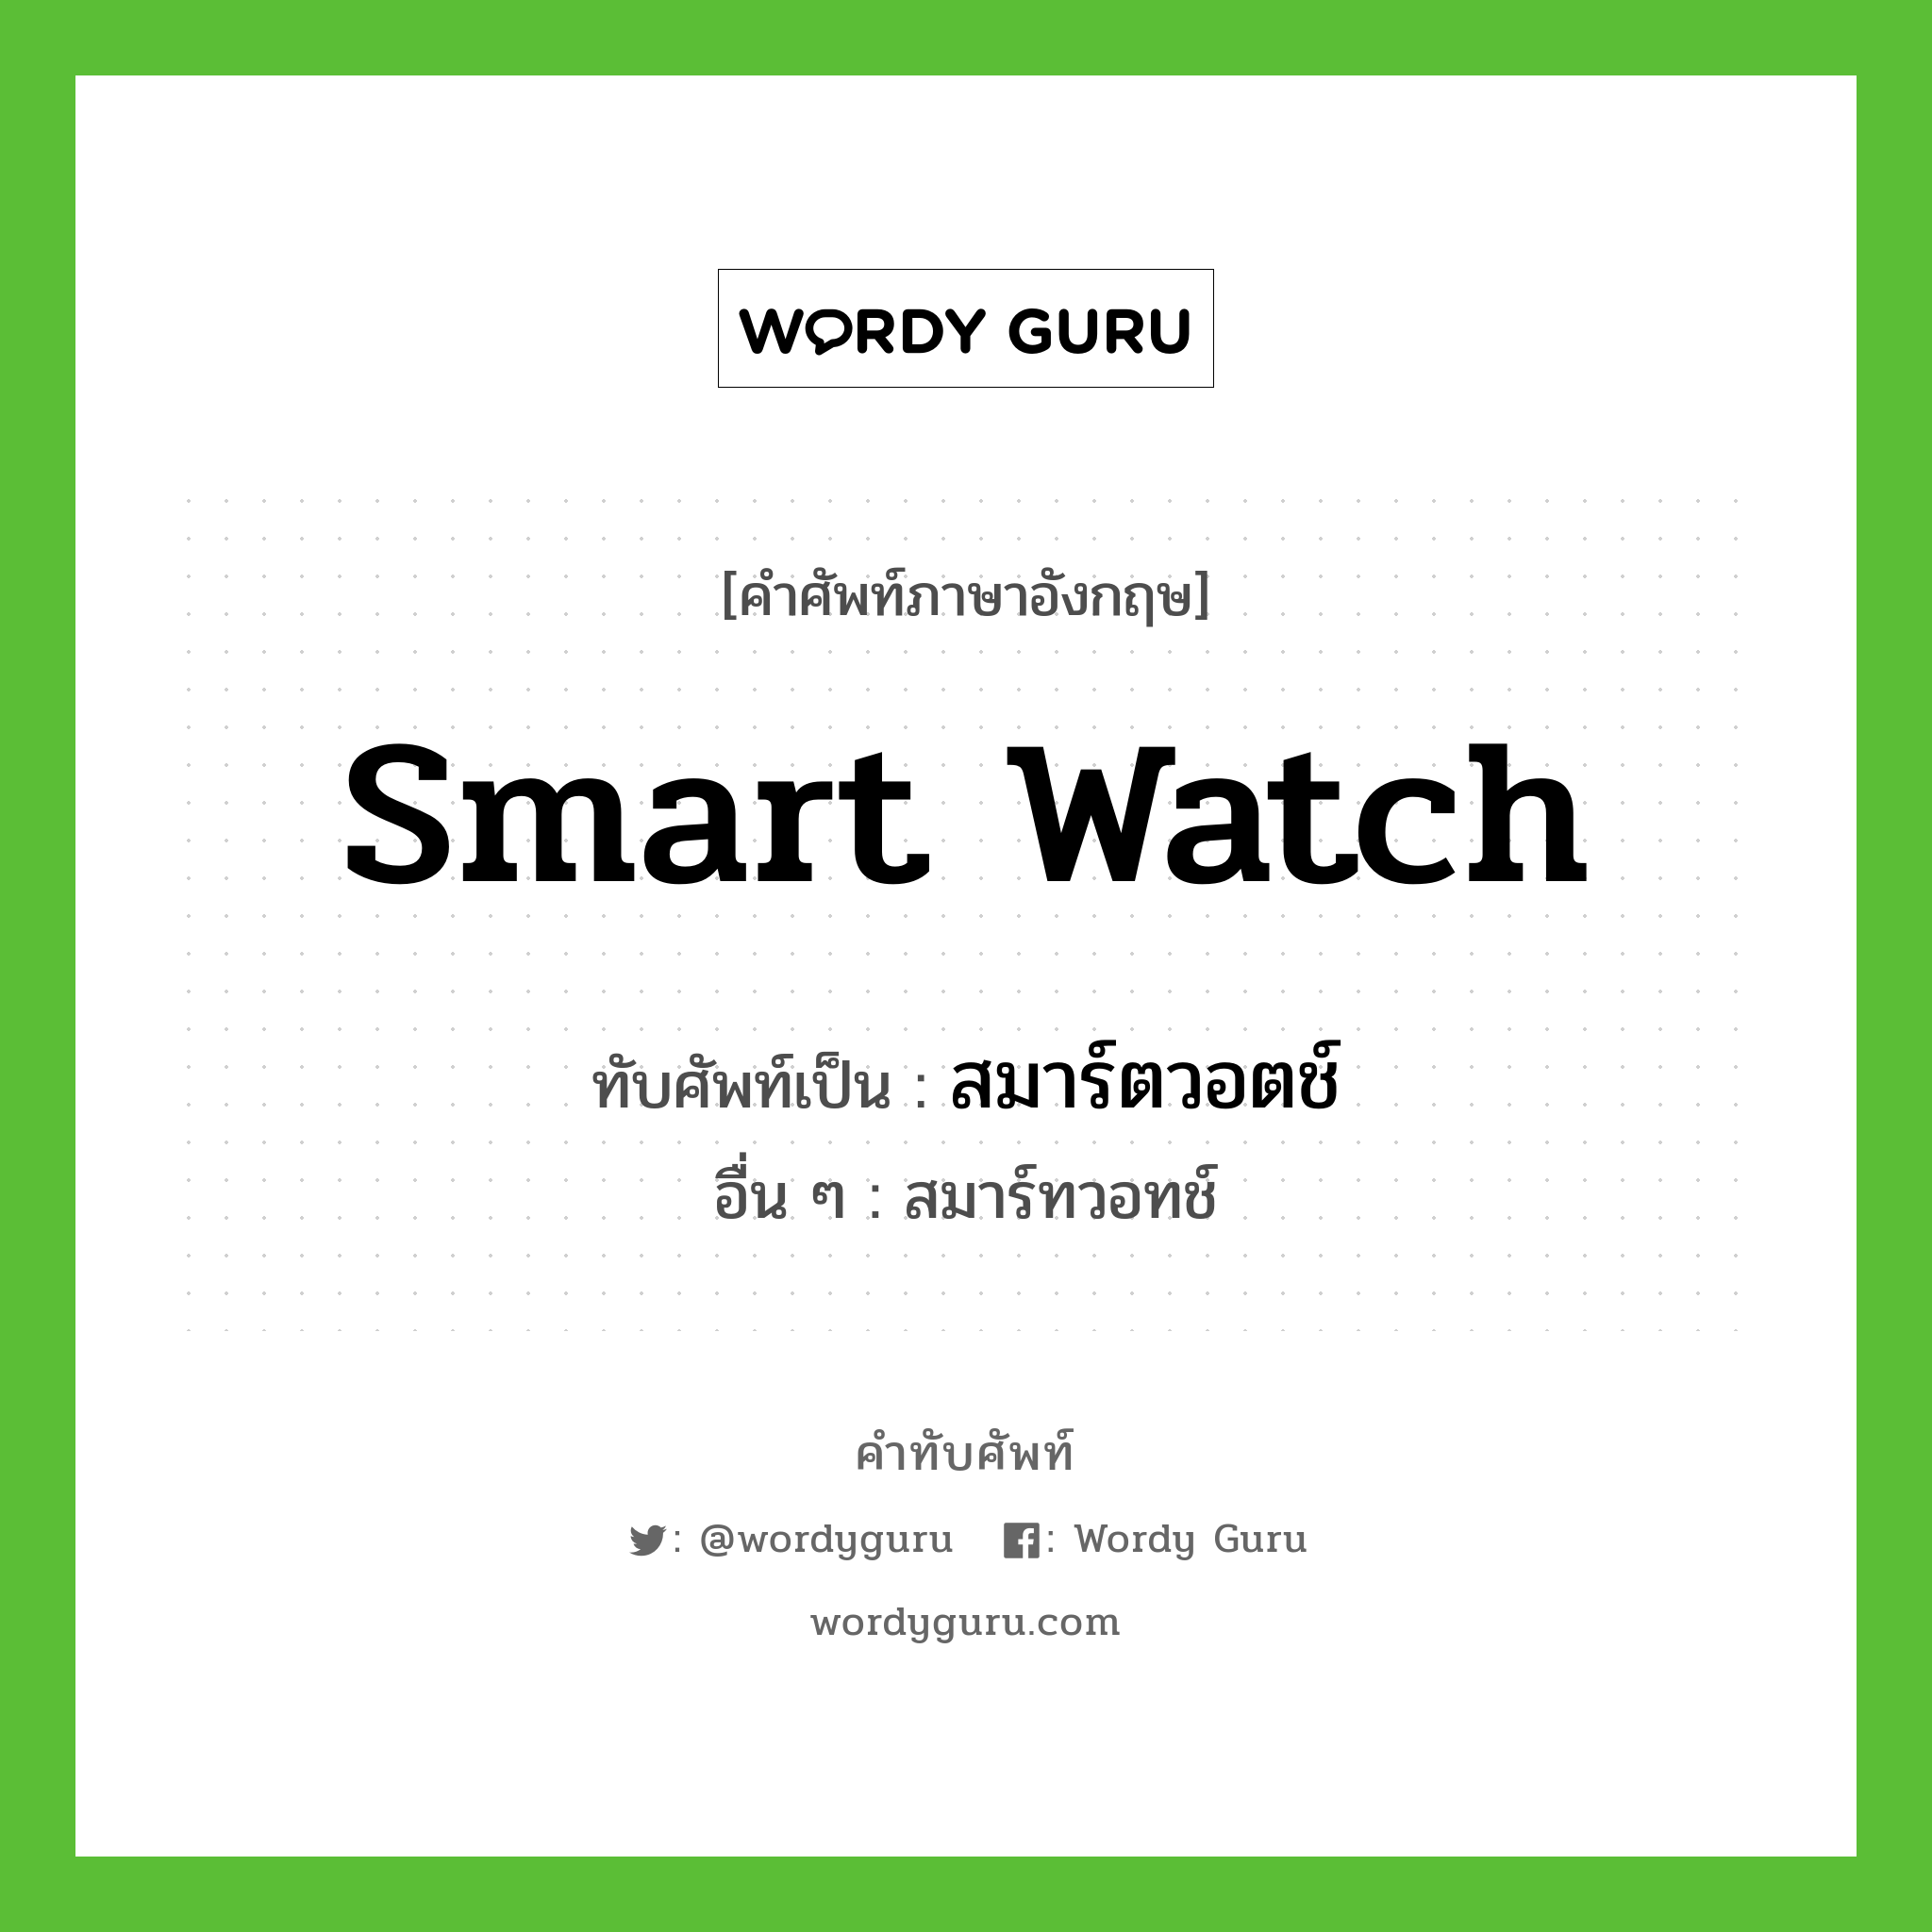 Smart watch เขียนเป็นคำไทยว่าอะไร?, คำศัพท์ภาษาอังกฤษ Smart watch ทับศัพท์เป็น สมาร์ตวอตช์ อื่น ๆ สมาร์ทวอทช์